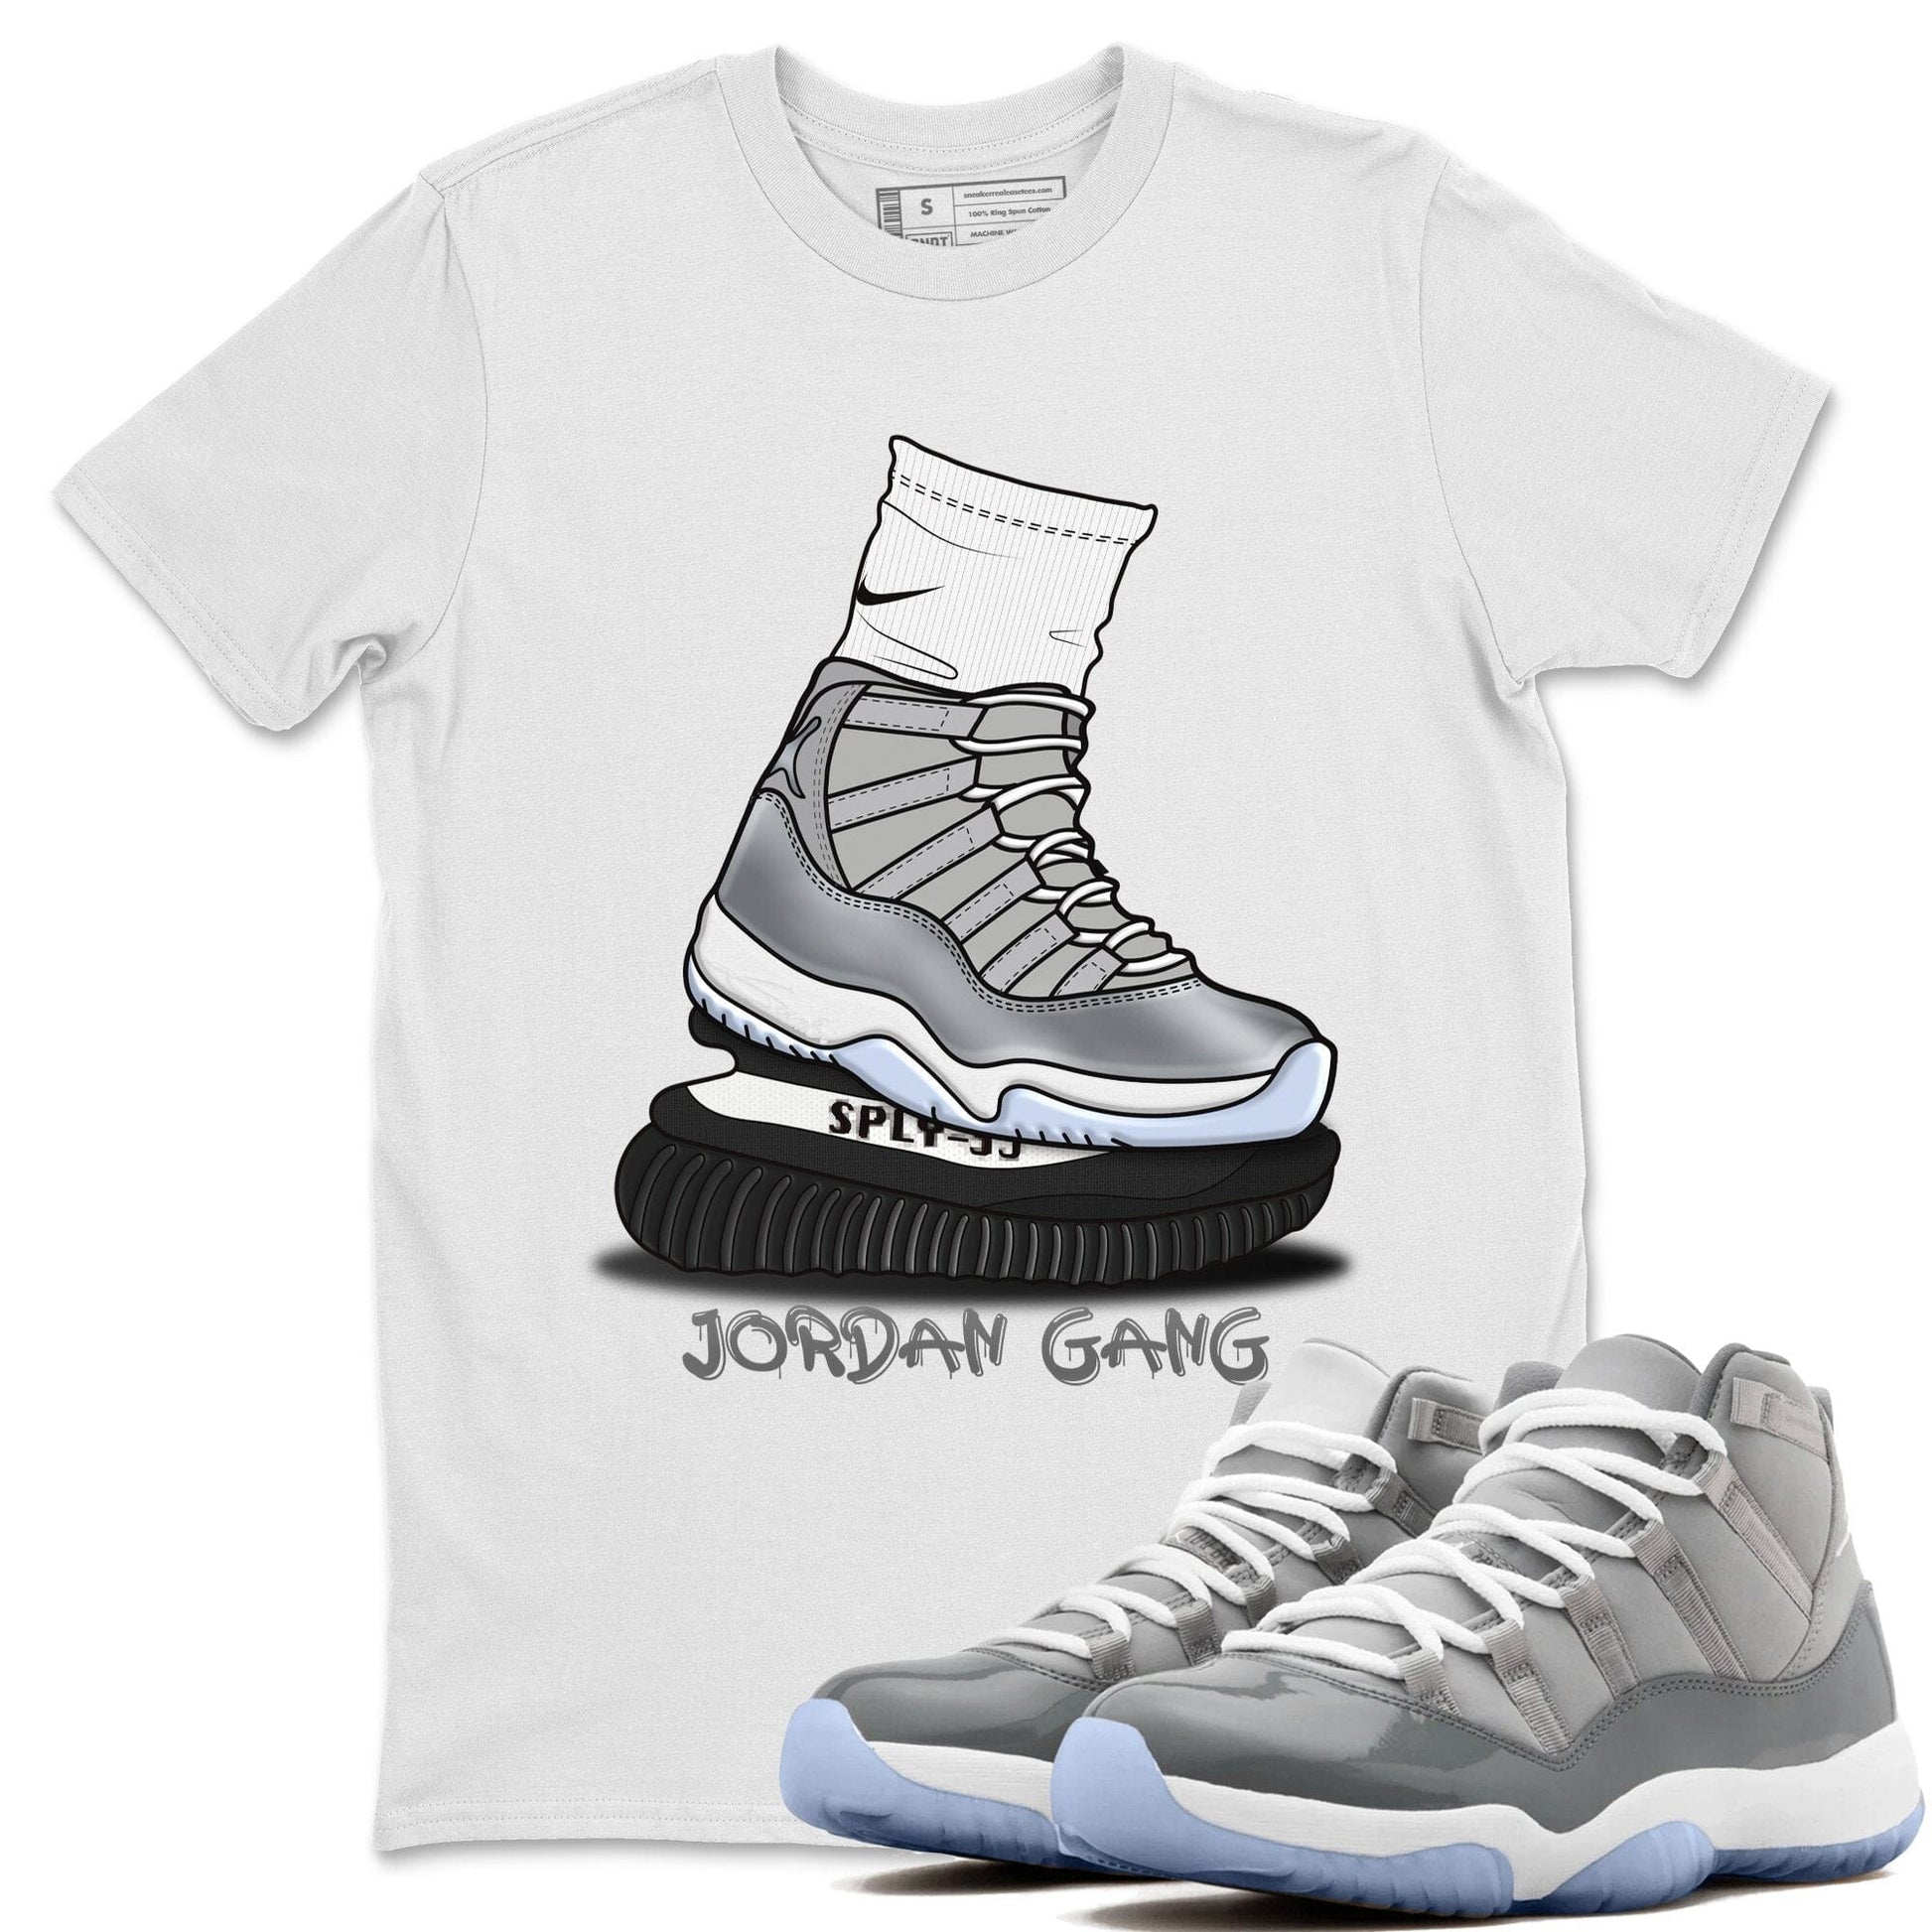 Jordan 11 Cool Grey Sneaker Match Tees Jordan Gang Sneaker Tees Jordan 11 Cool Grey Sneaker Release Tees Unisex Shirts